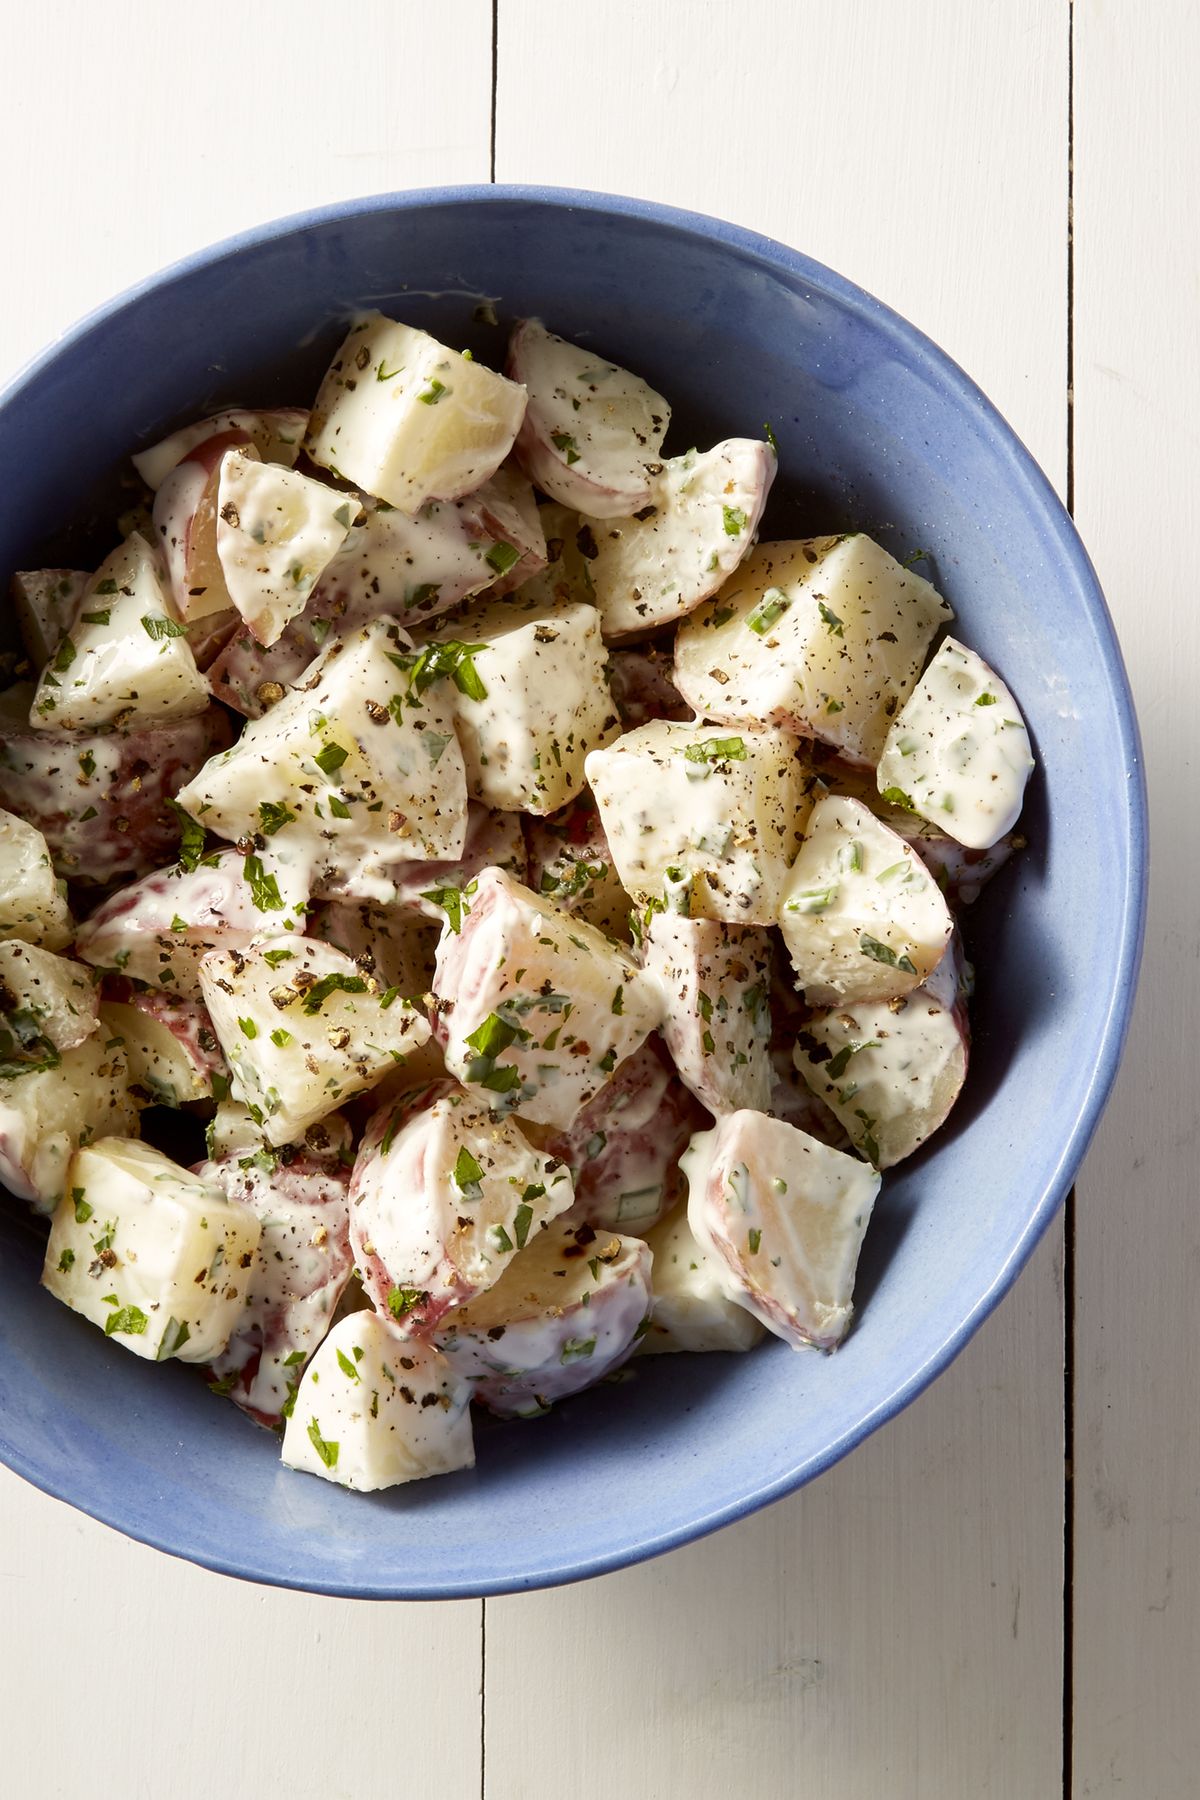 creamy potato salad with fresh herbs on top